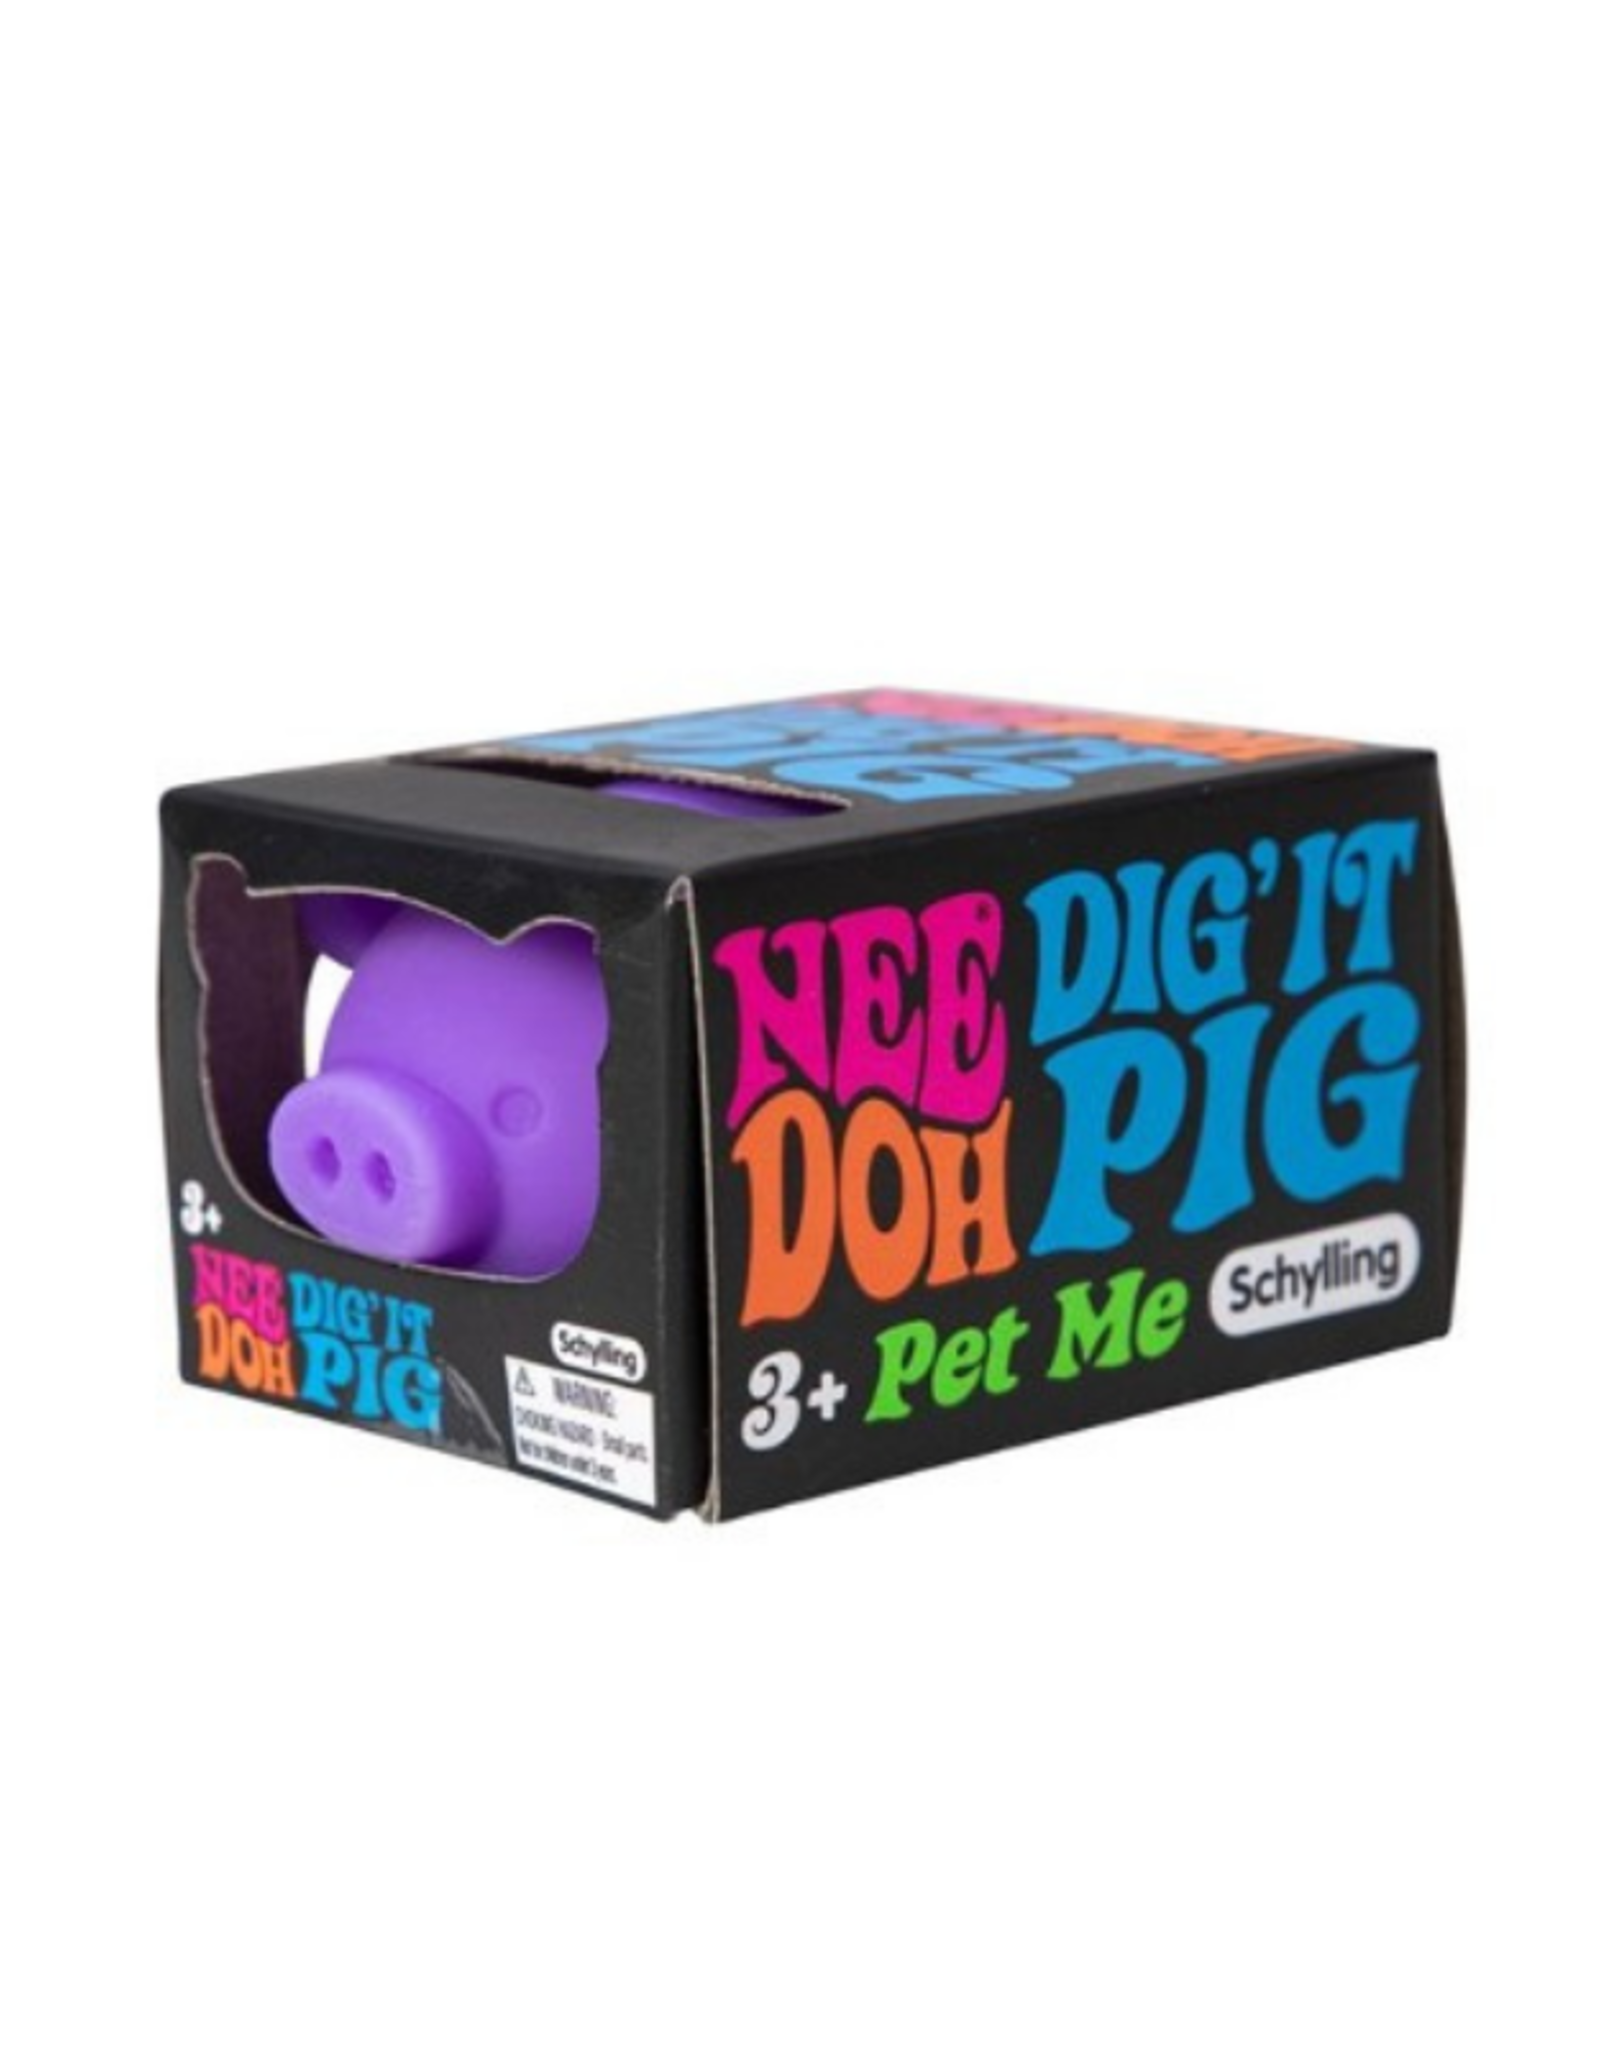 NeeDoh: Dig It Pig